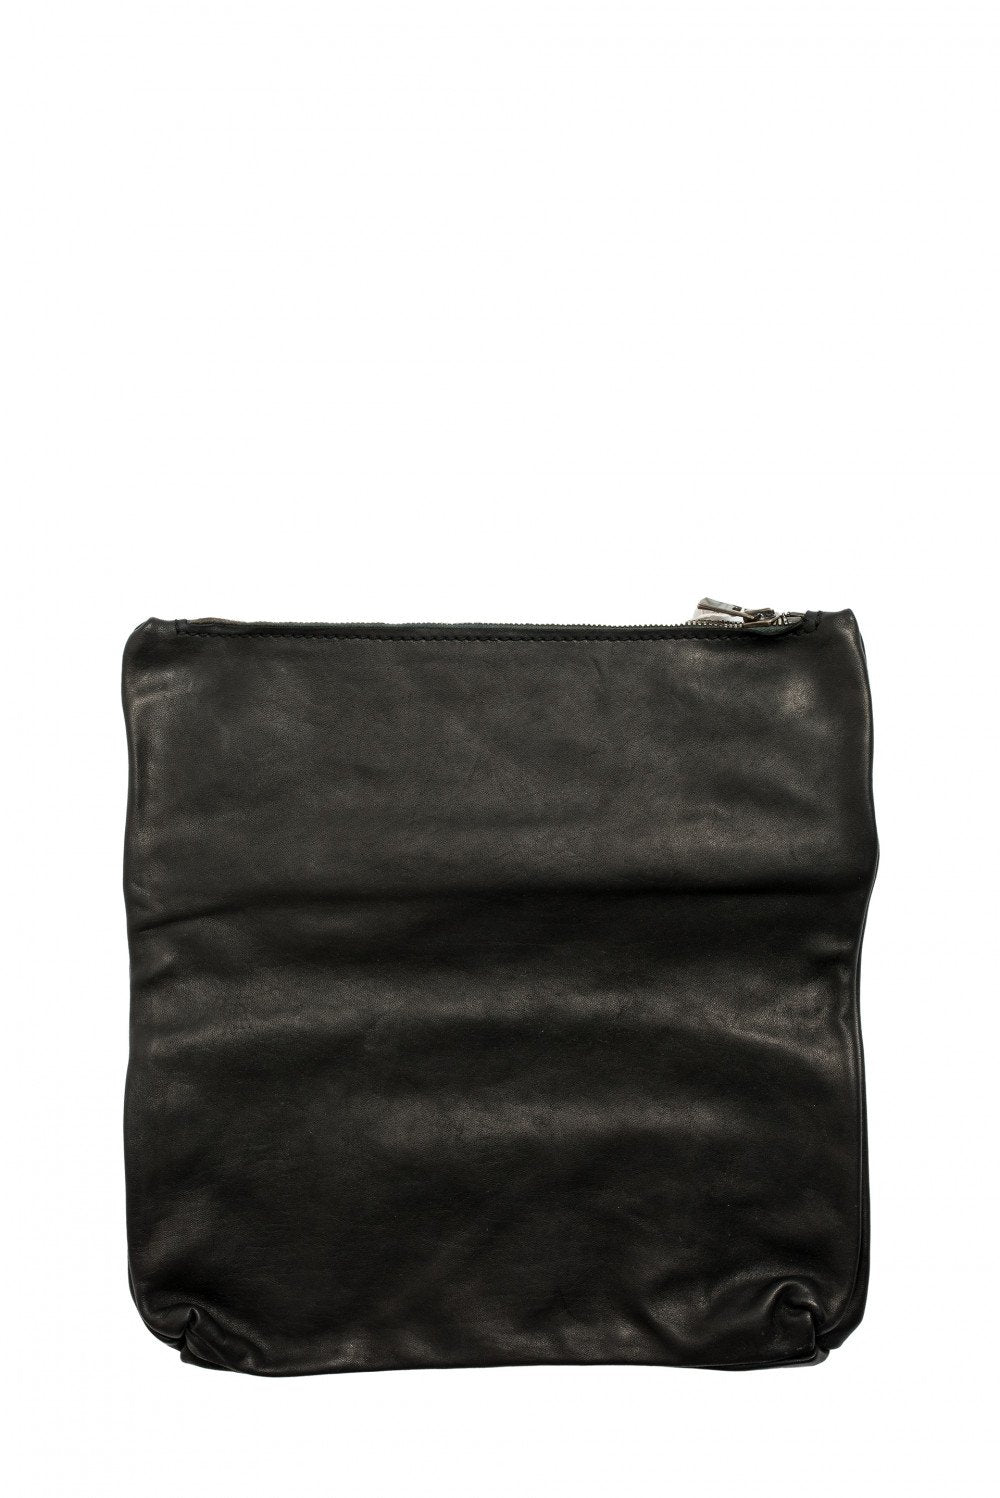 Buy ZiMing Glossy Patent Leather Handbags Women Kiss Lock Purse Top Handle  Handbag Evening Bag Satchel Shoulder Crossbody Bag, Red, One Size at  Amazon.in